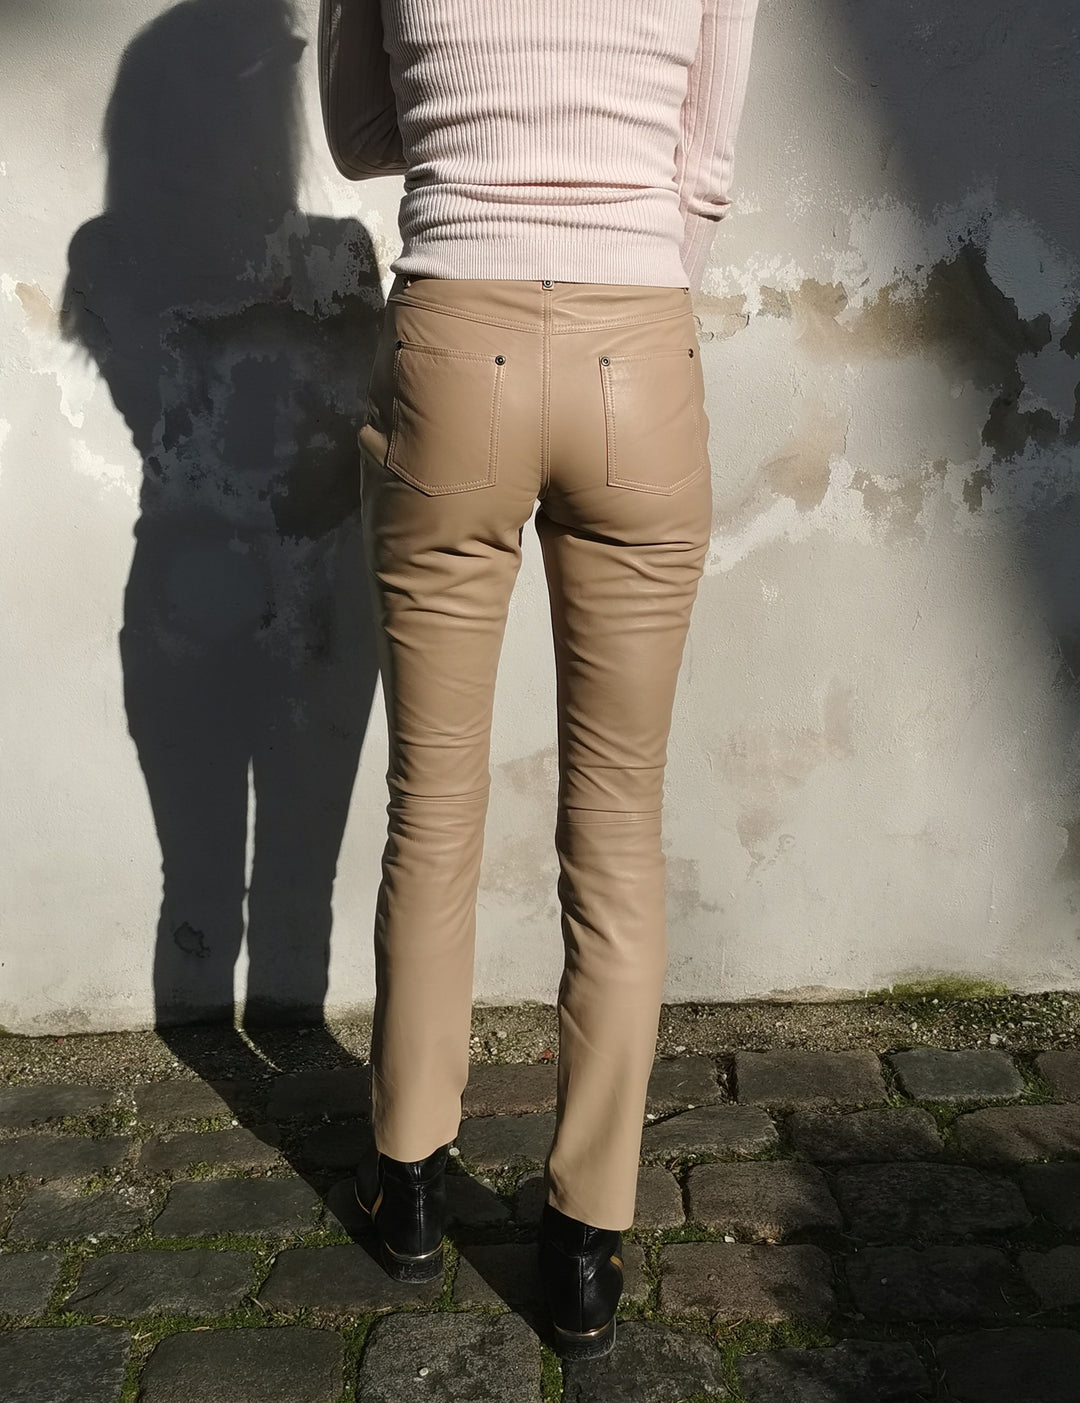 Jill Trouser - Lamb Nappa Leather trouser - Women - Cafe Latte